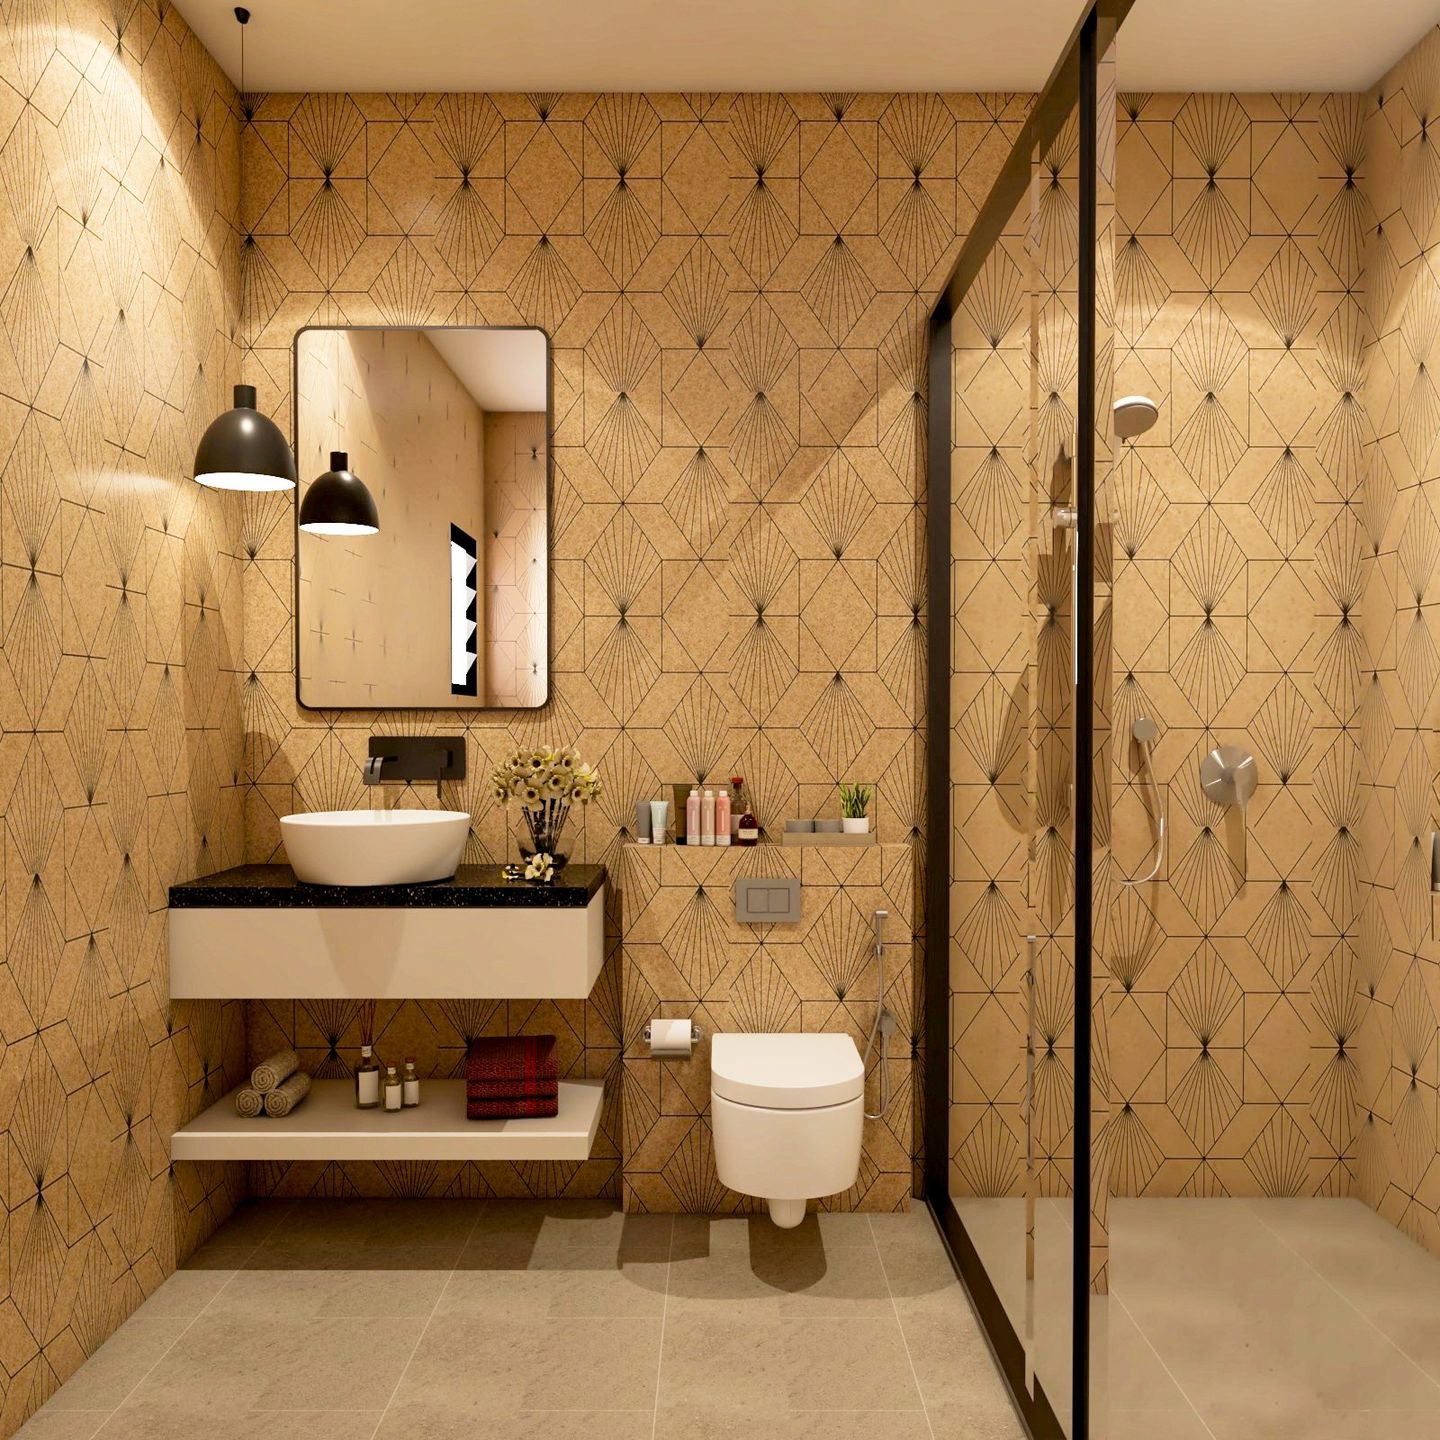 Bathroom Design With A Hanging Light - Livspace